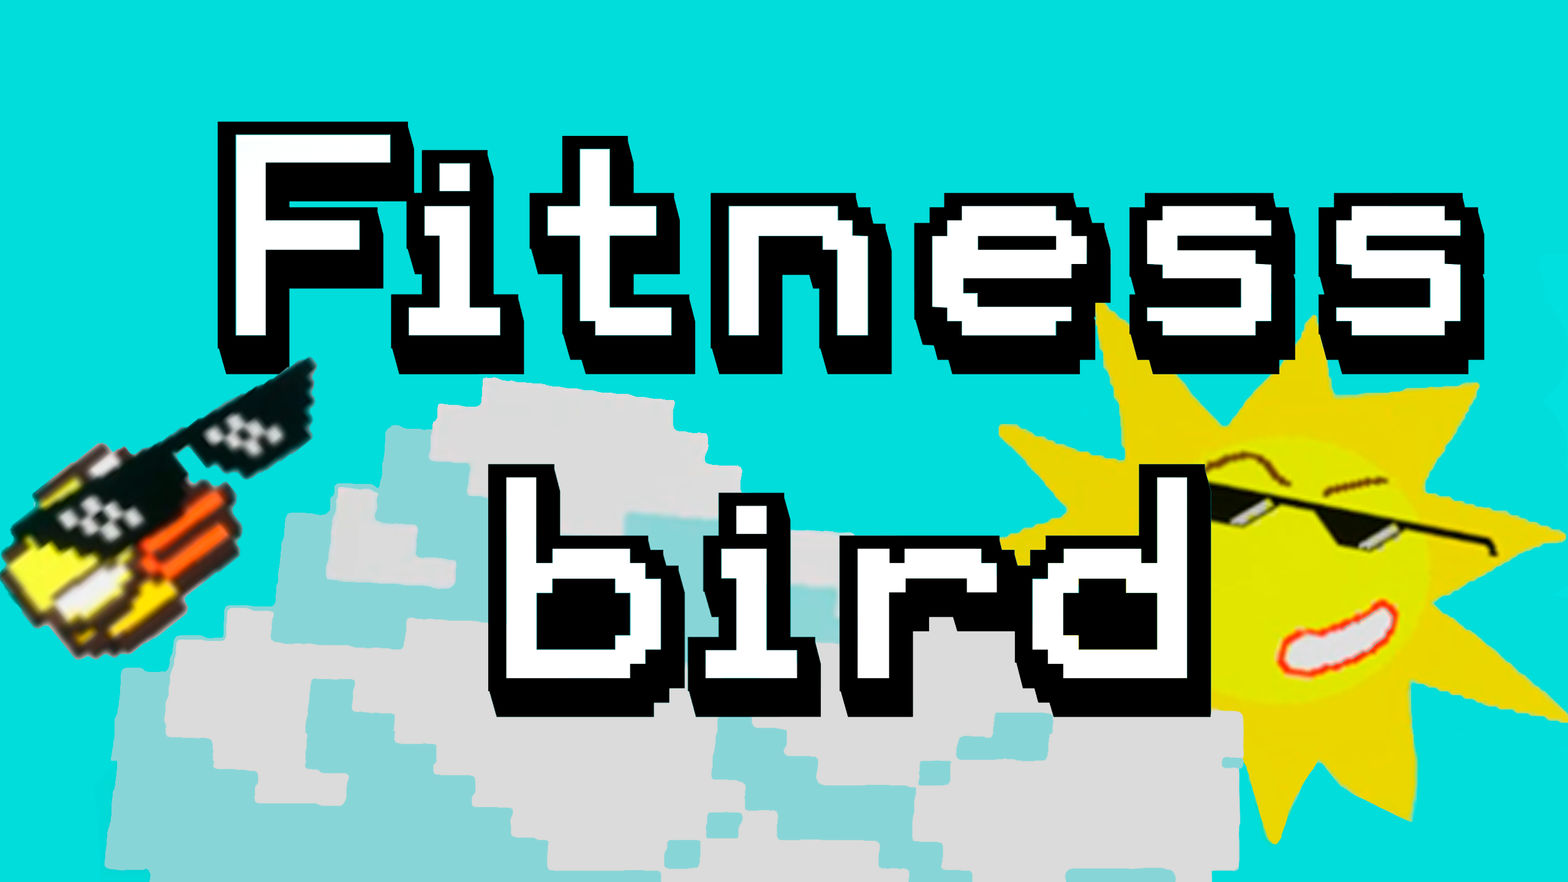 FitnessBird